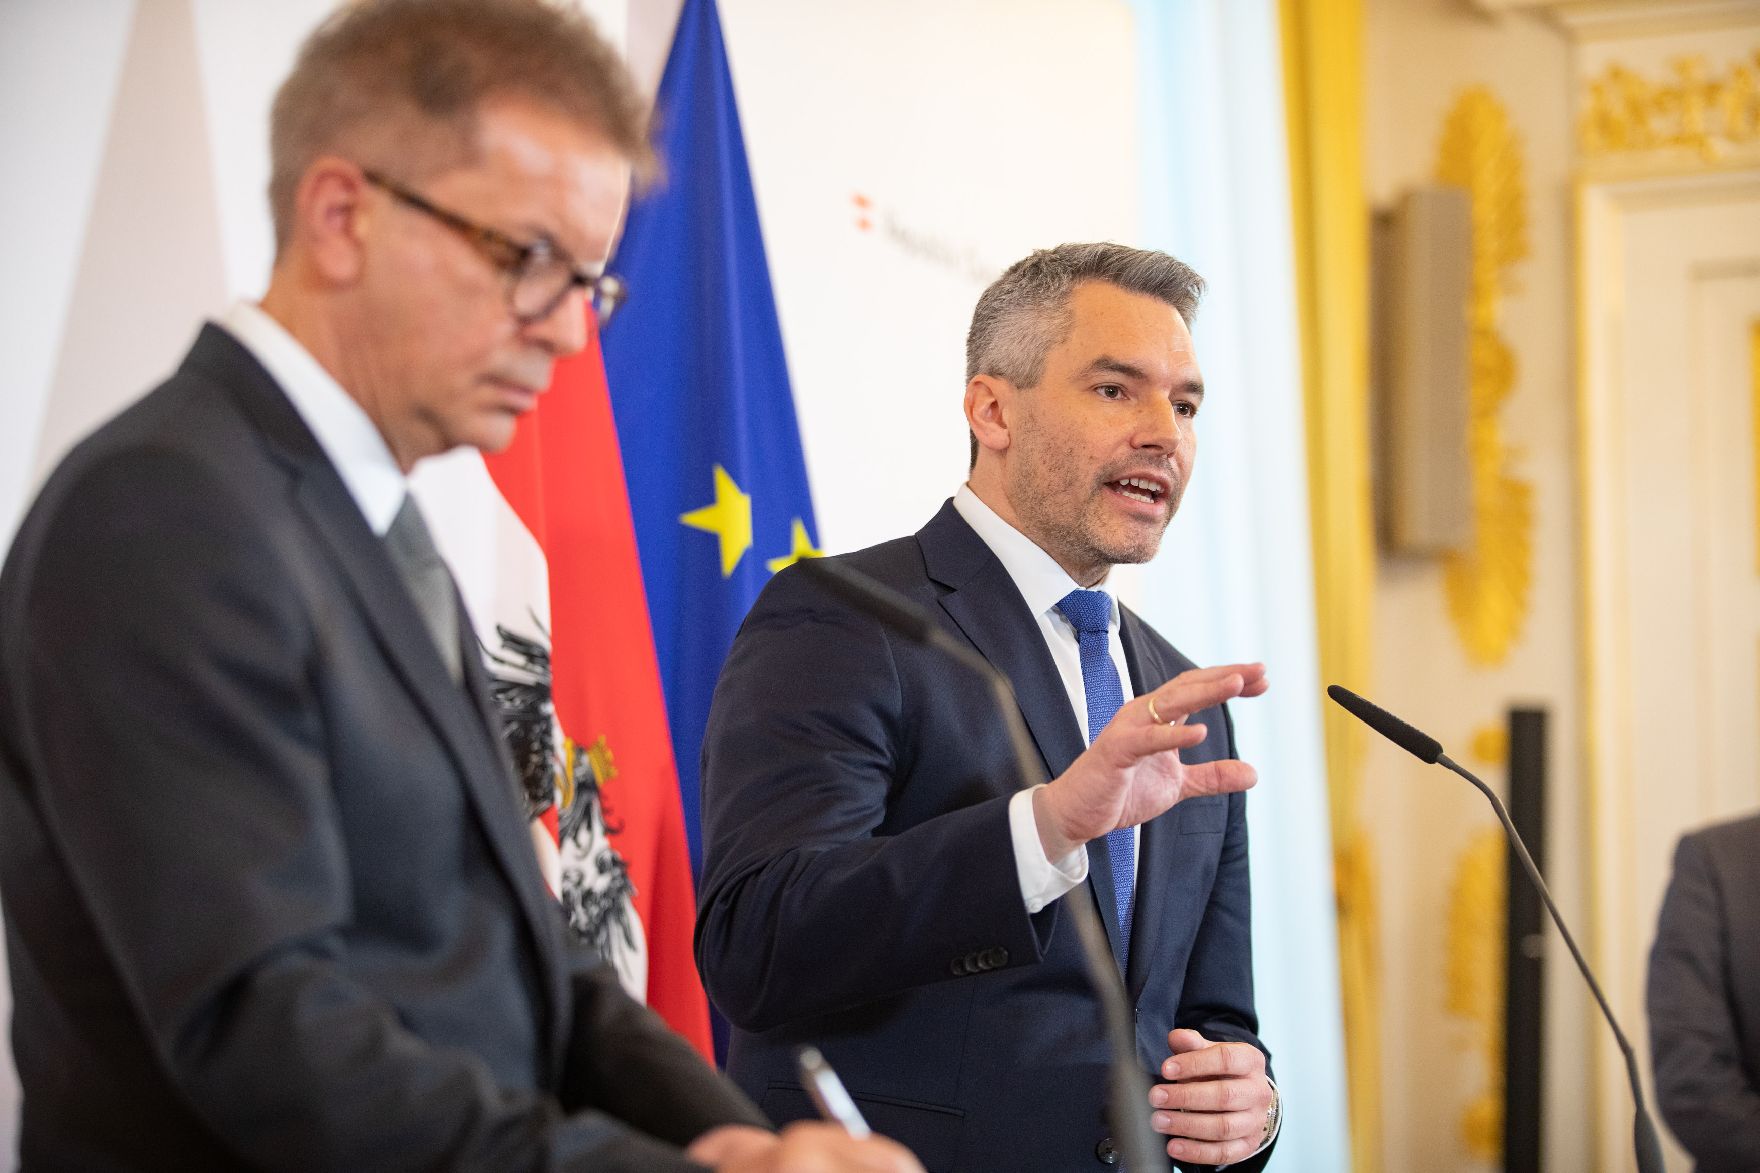 Bundesminister Rudolf Anschober (l.) und Bundesminister Karl Nehammer (r.) beim Pressefoyer nach dem Ministerrat am 15. Jänner 2020.